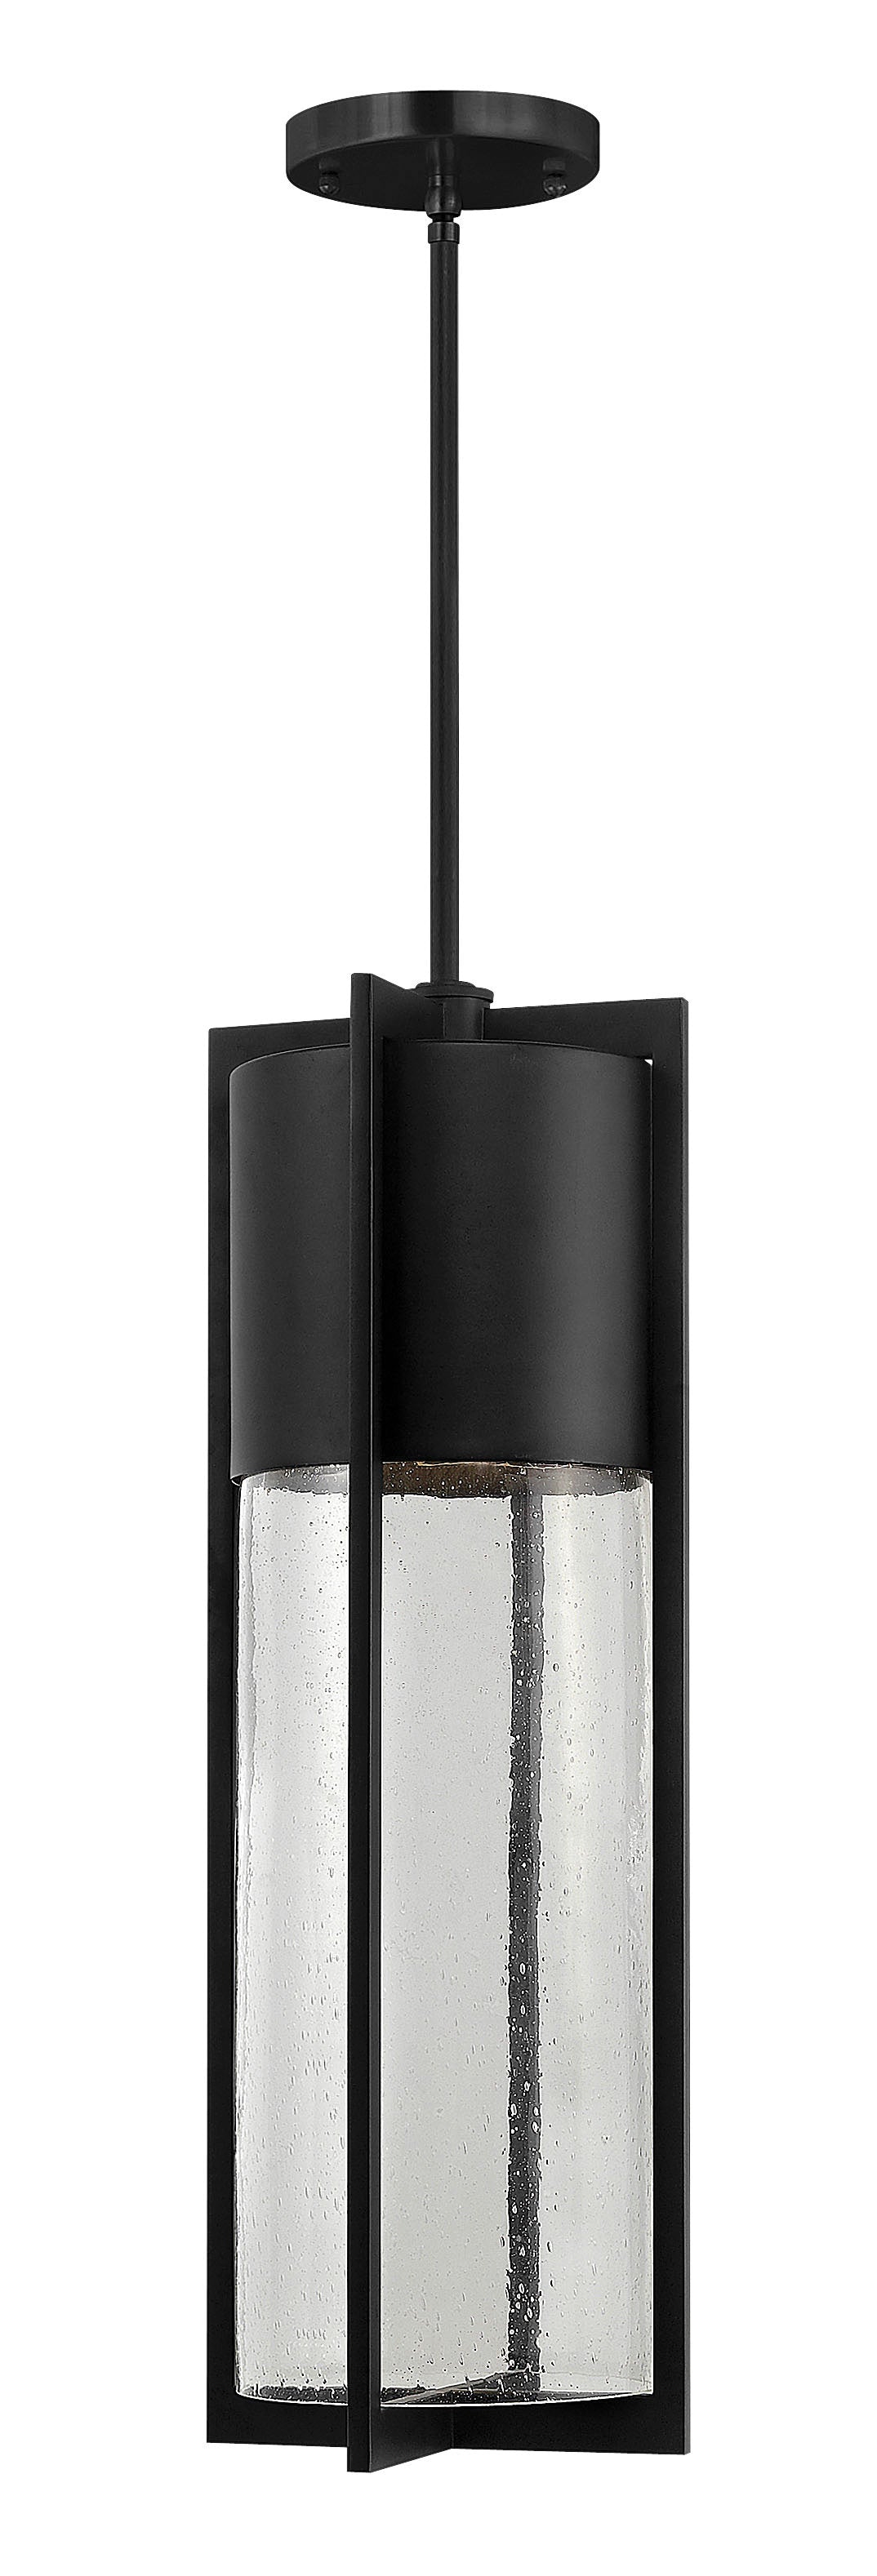 SHELTER Outdoor pendant Black INTEGRATED LED - 1328BK-LED | HINKLEY